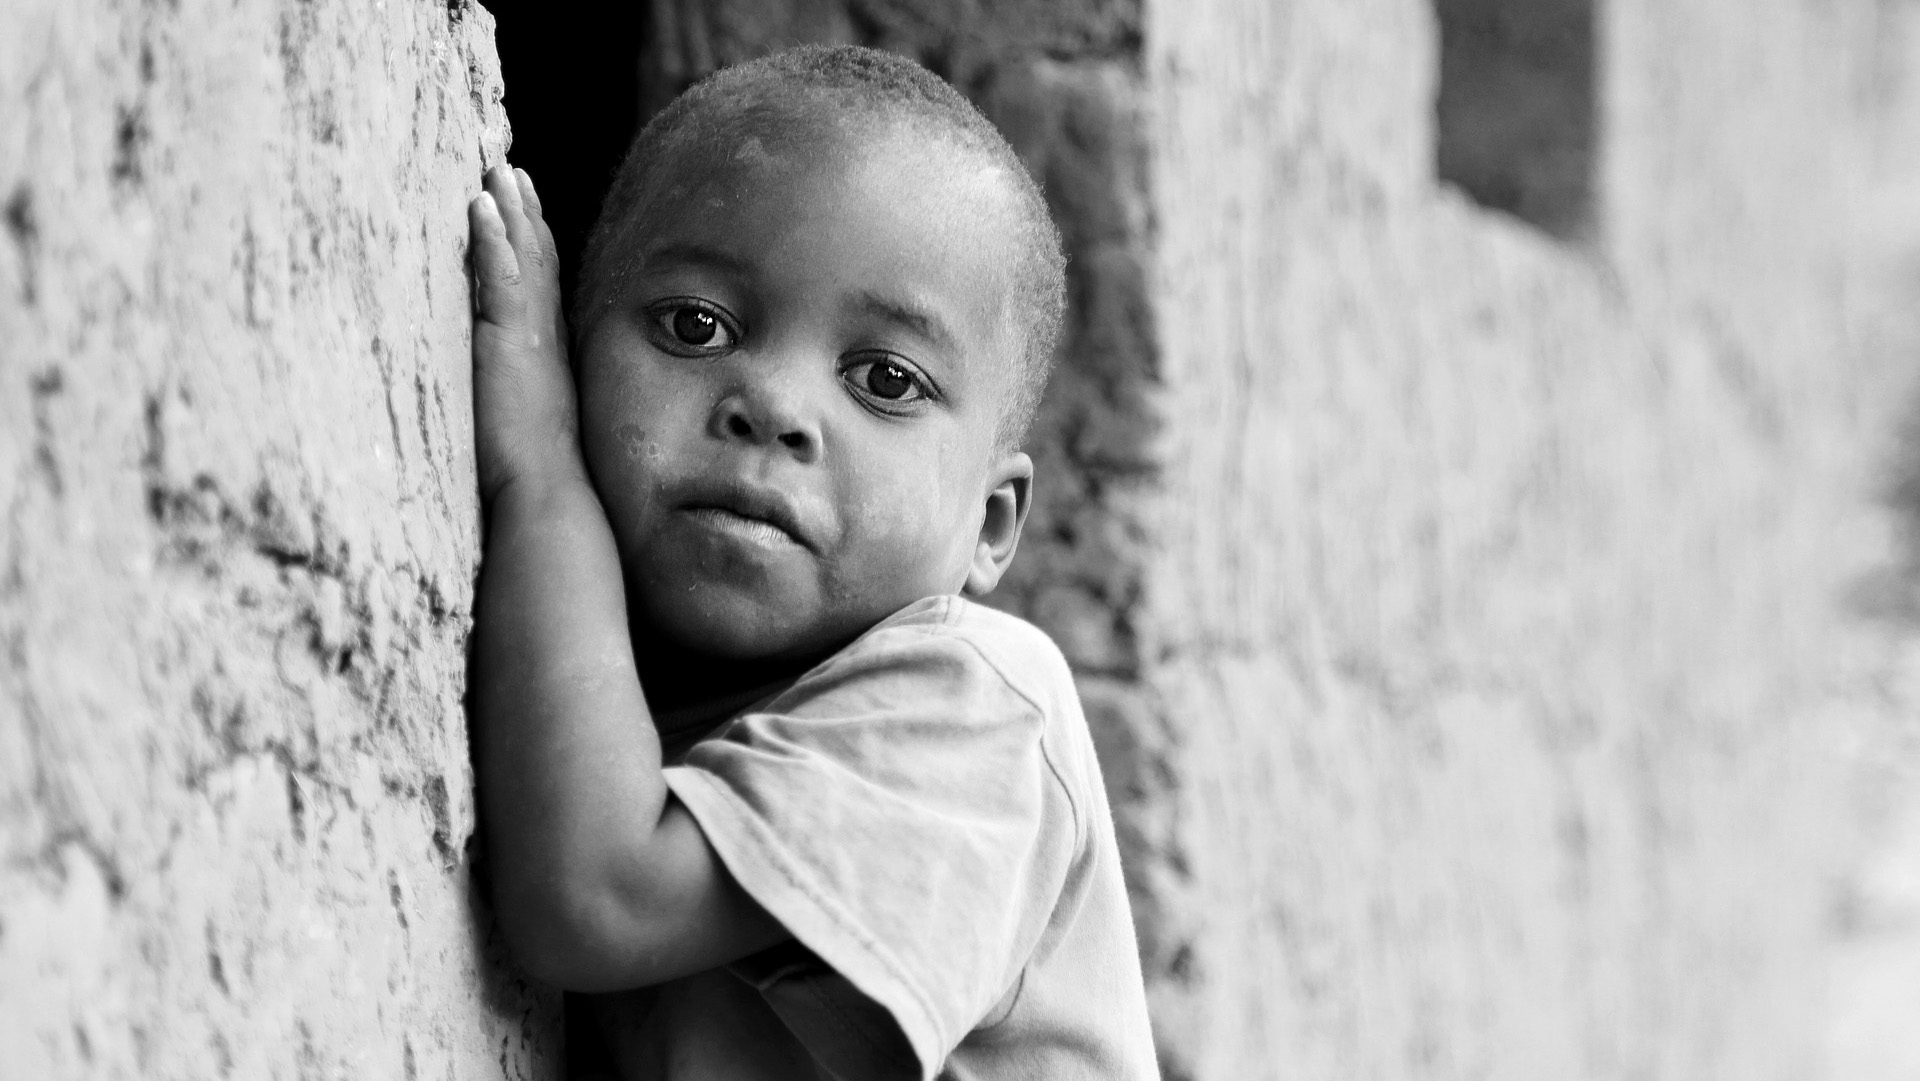 children-of-uganda-1994833_1920